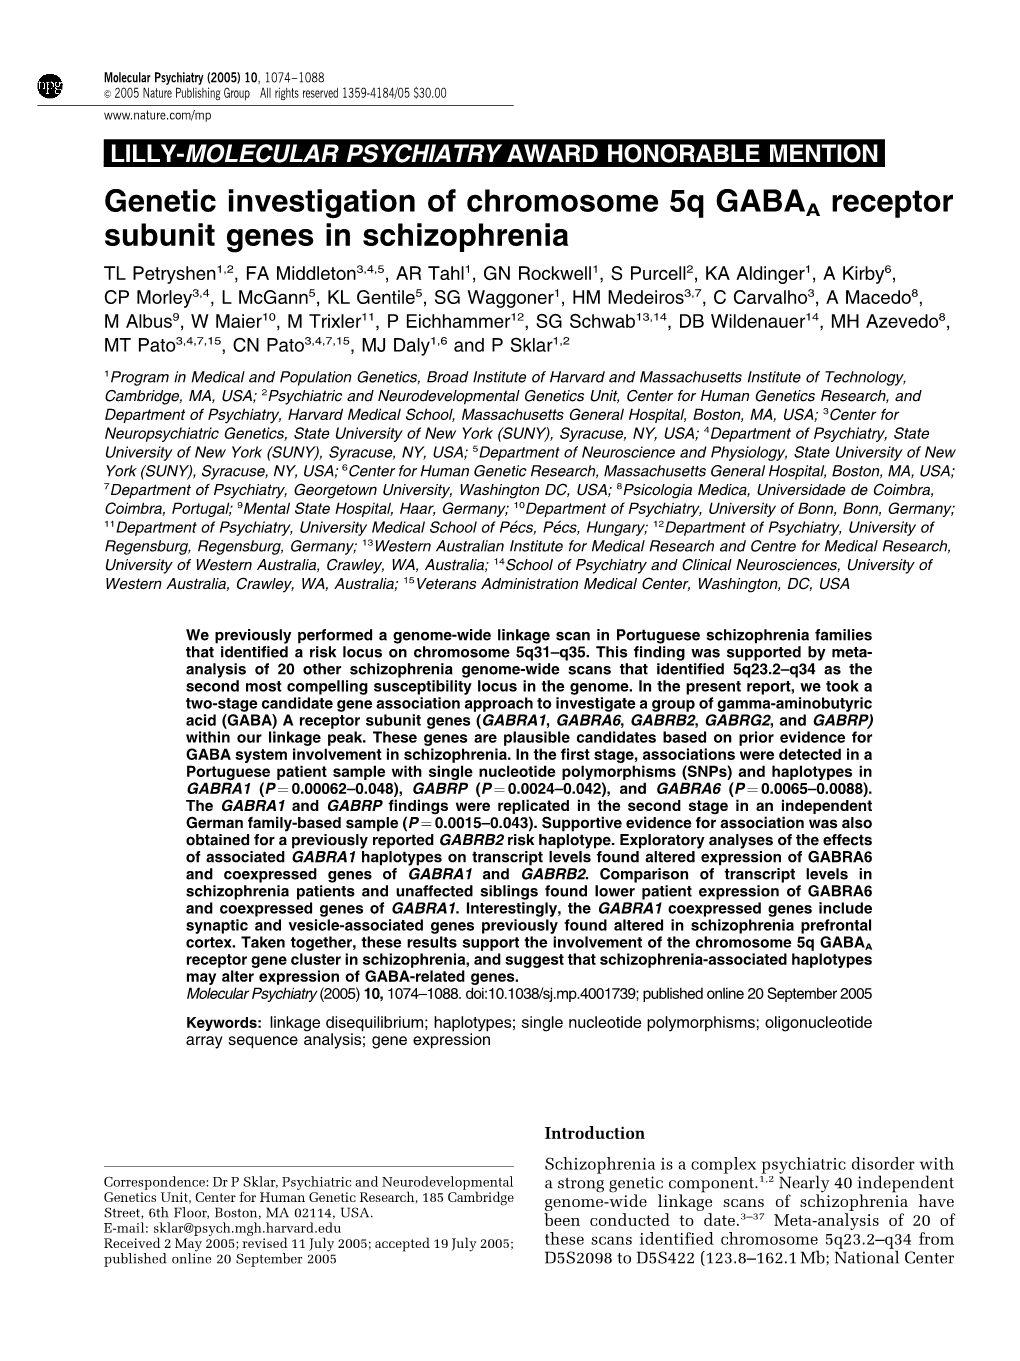 Genetic Investigation of Chromosome 5Q GABAA Receptor Subunit Genes